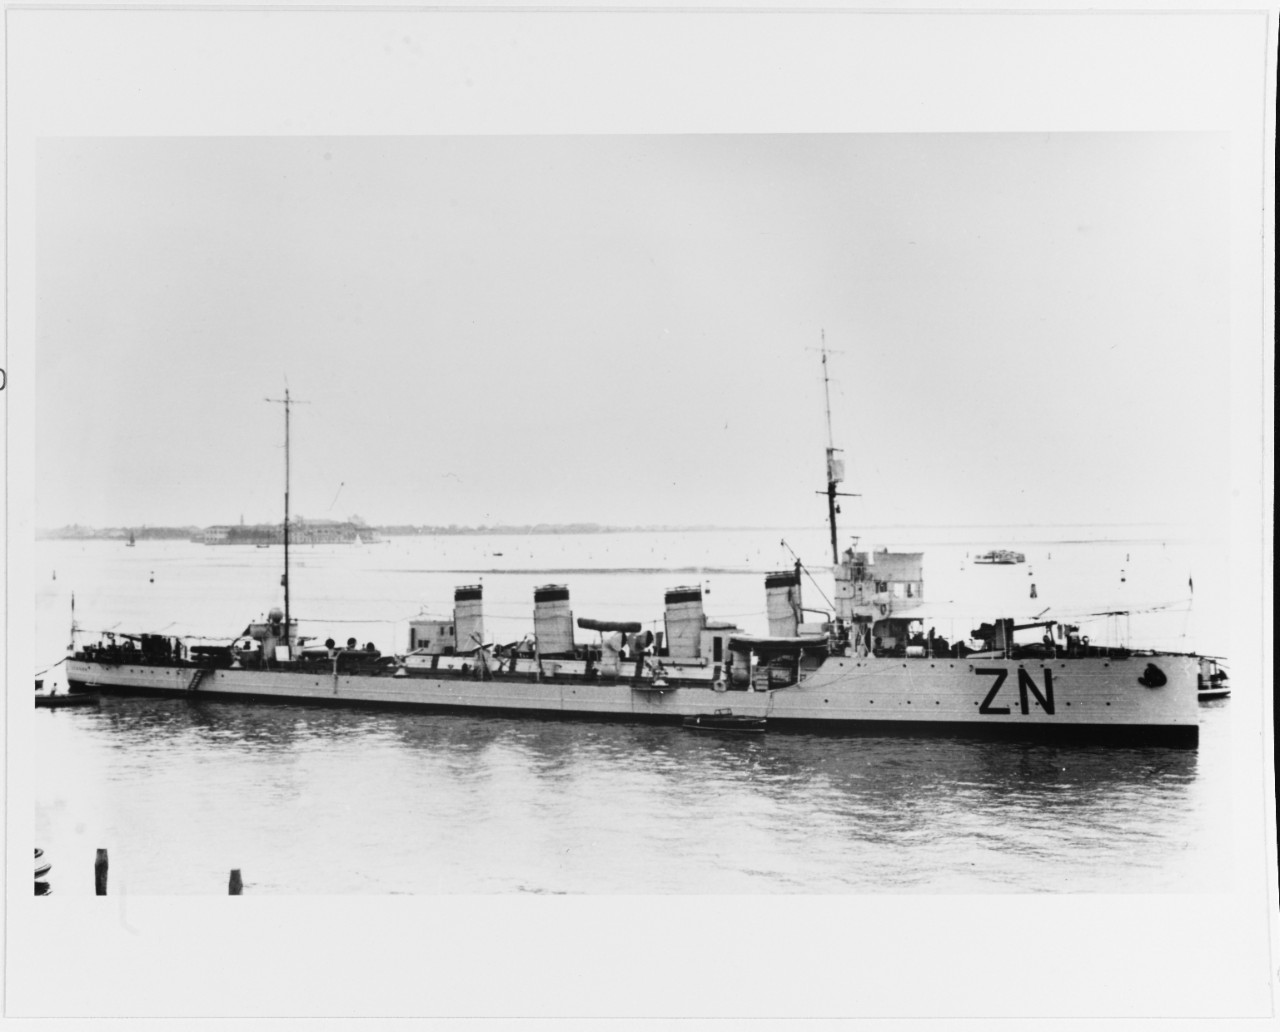 ZENSON (Italian Destroyer, 1913-1937)